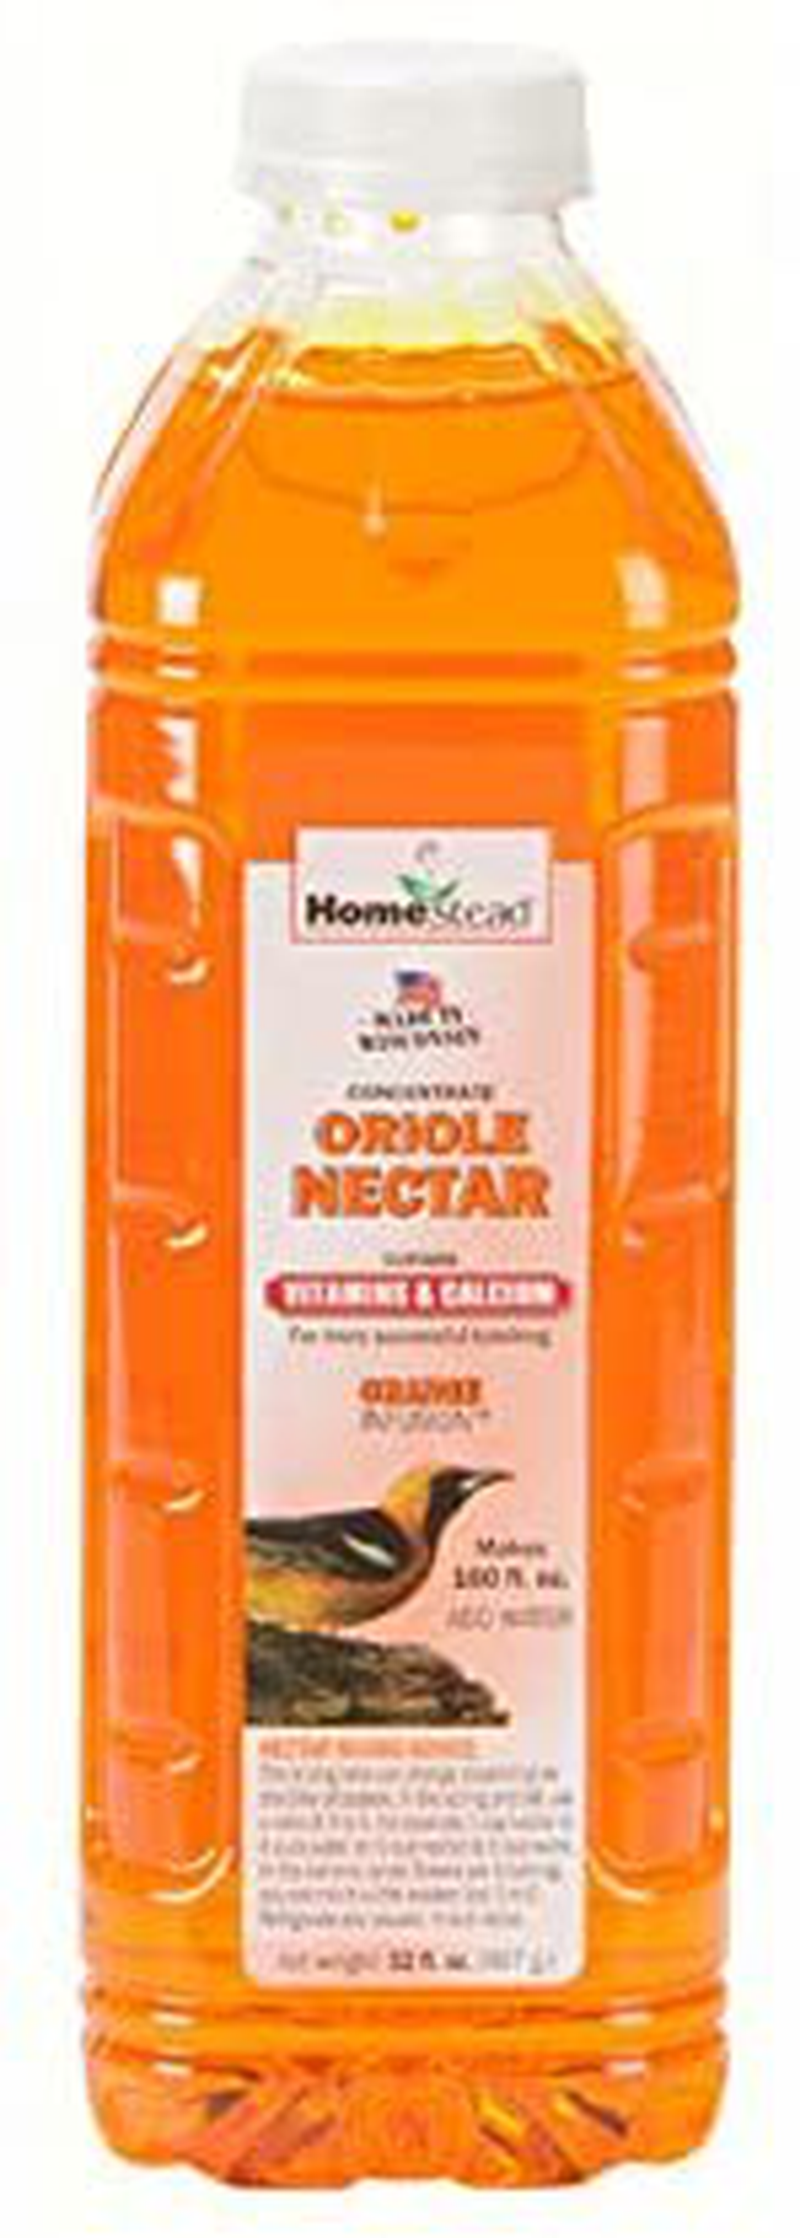 Homestead 32 Ounce Oriole Orange Nectar Concentrate (Liquid) - 4373